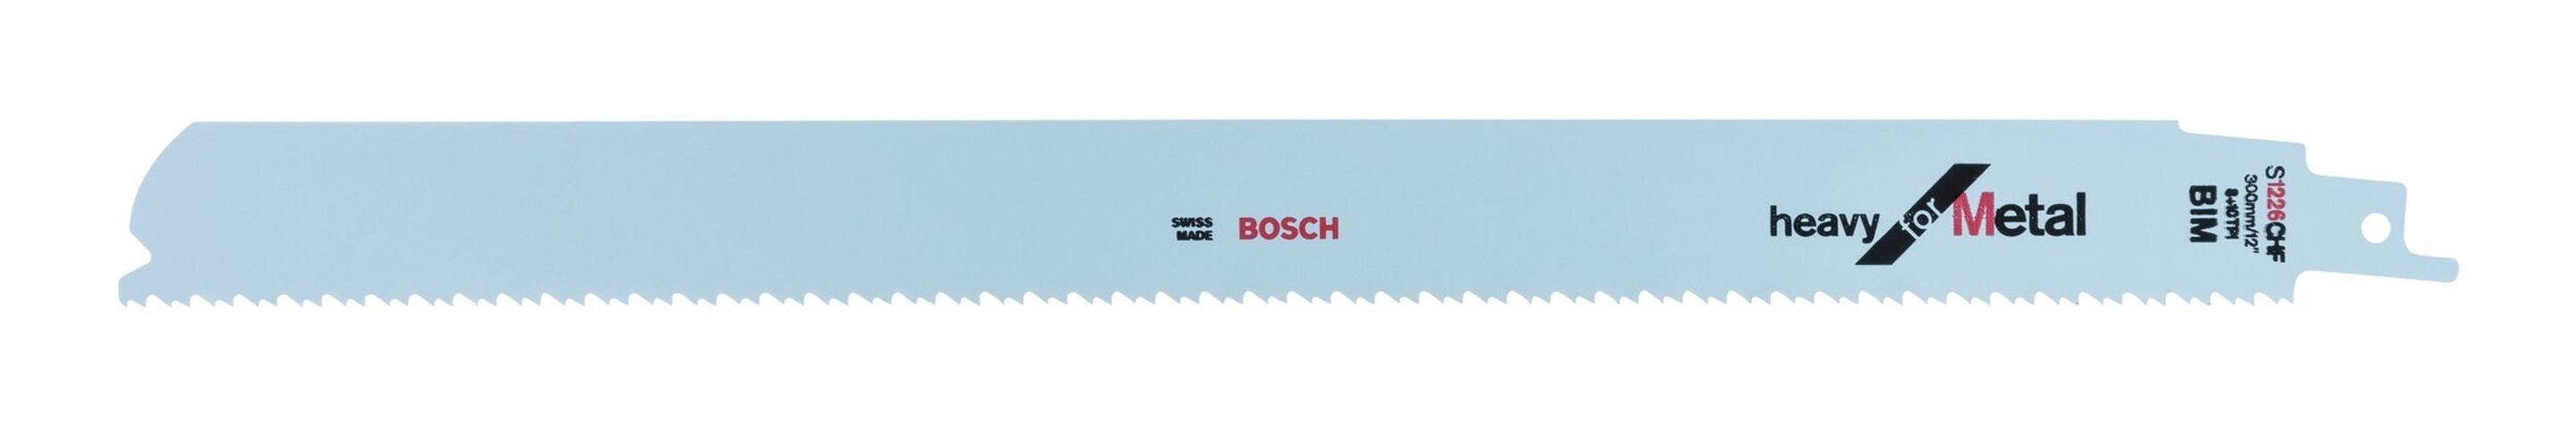 BOSCH Säbelsägeblatt (5 Stück), S CHF Heavy 5er-Pack - 1226 for Metal